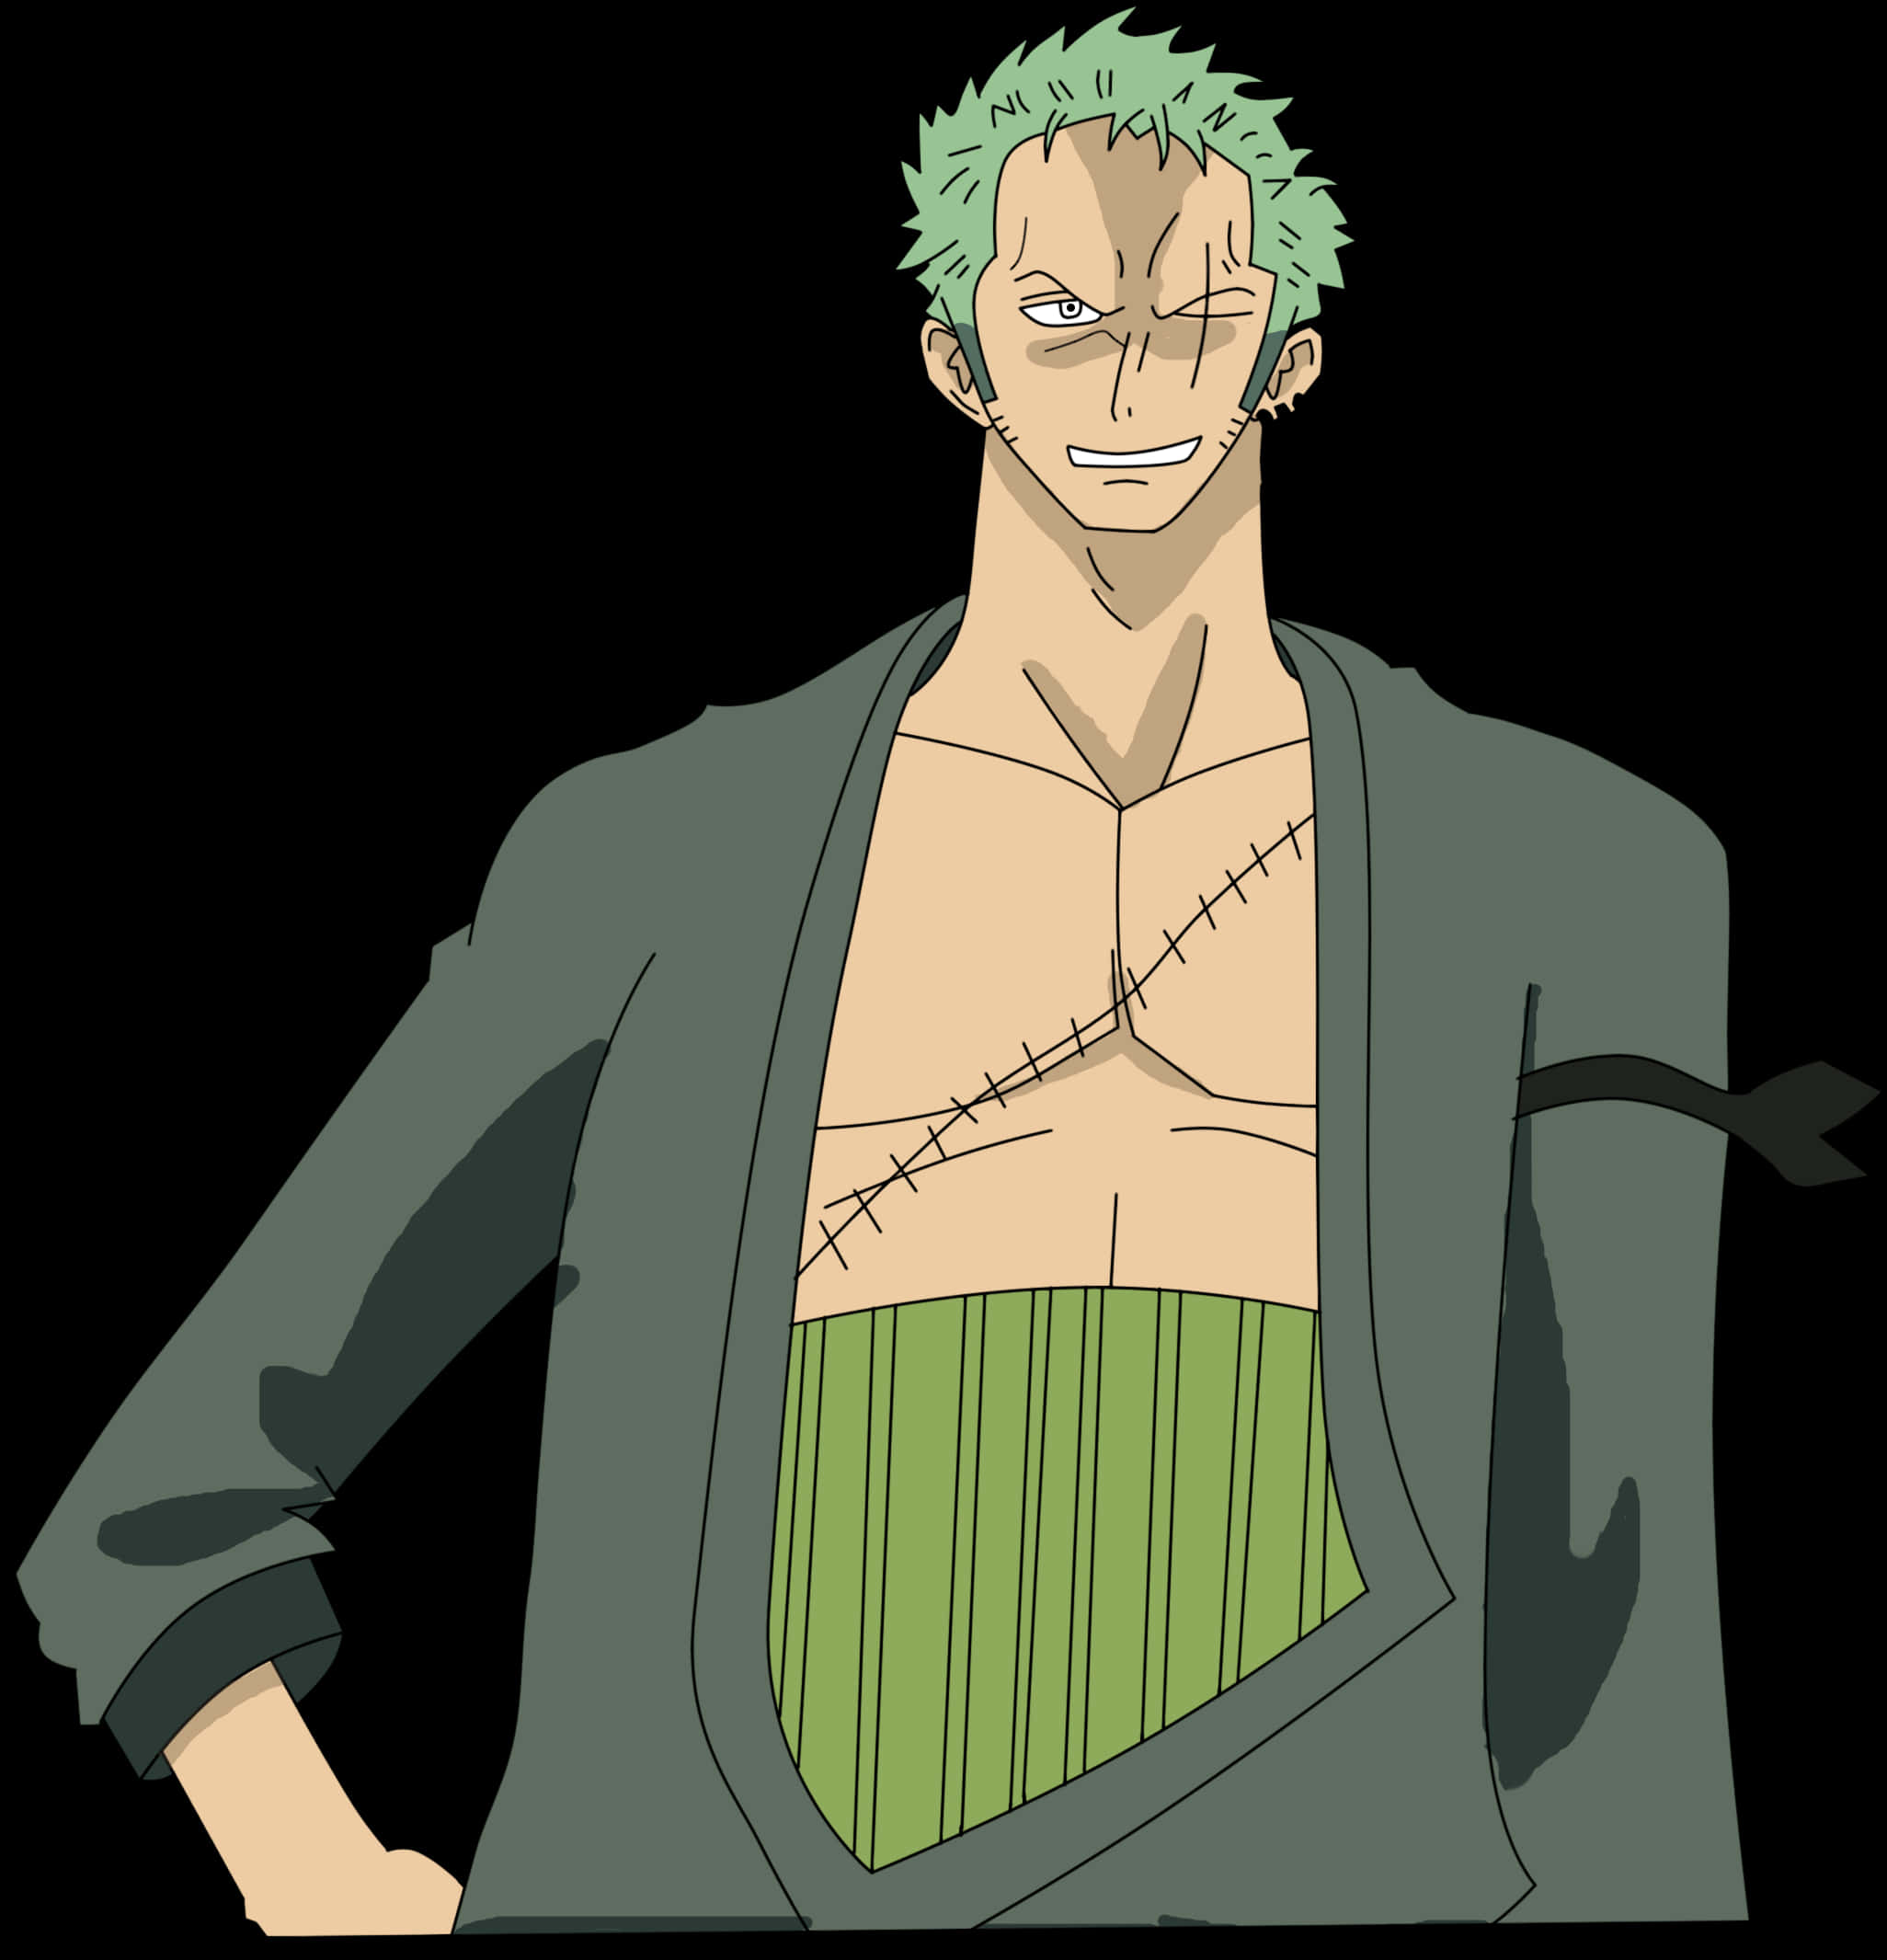 A Cartoon Of A Man With Green Hair